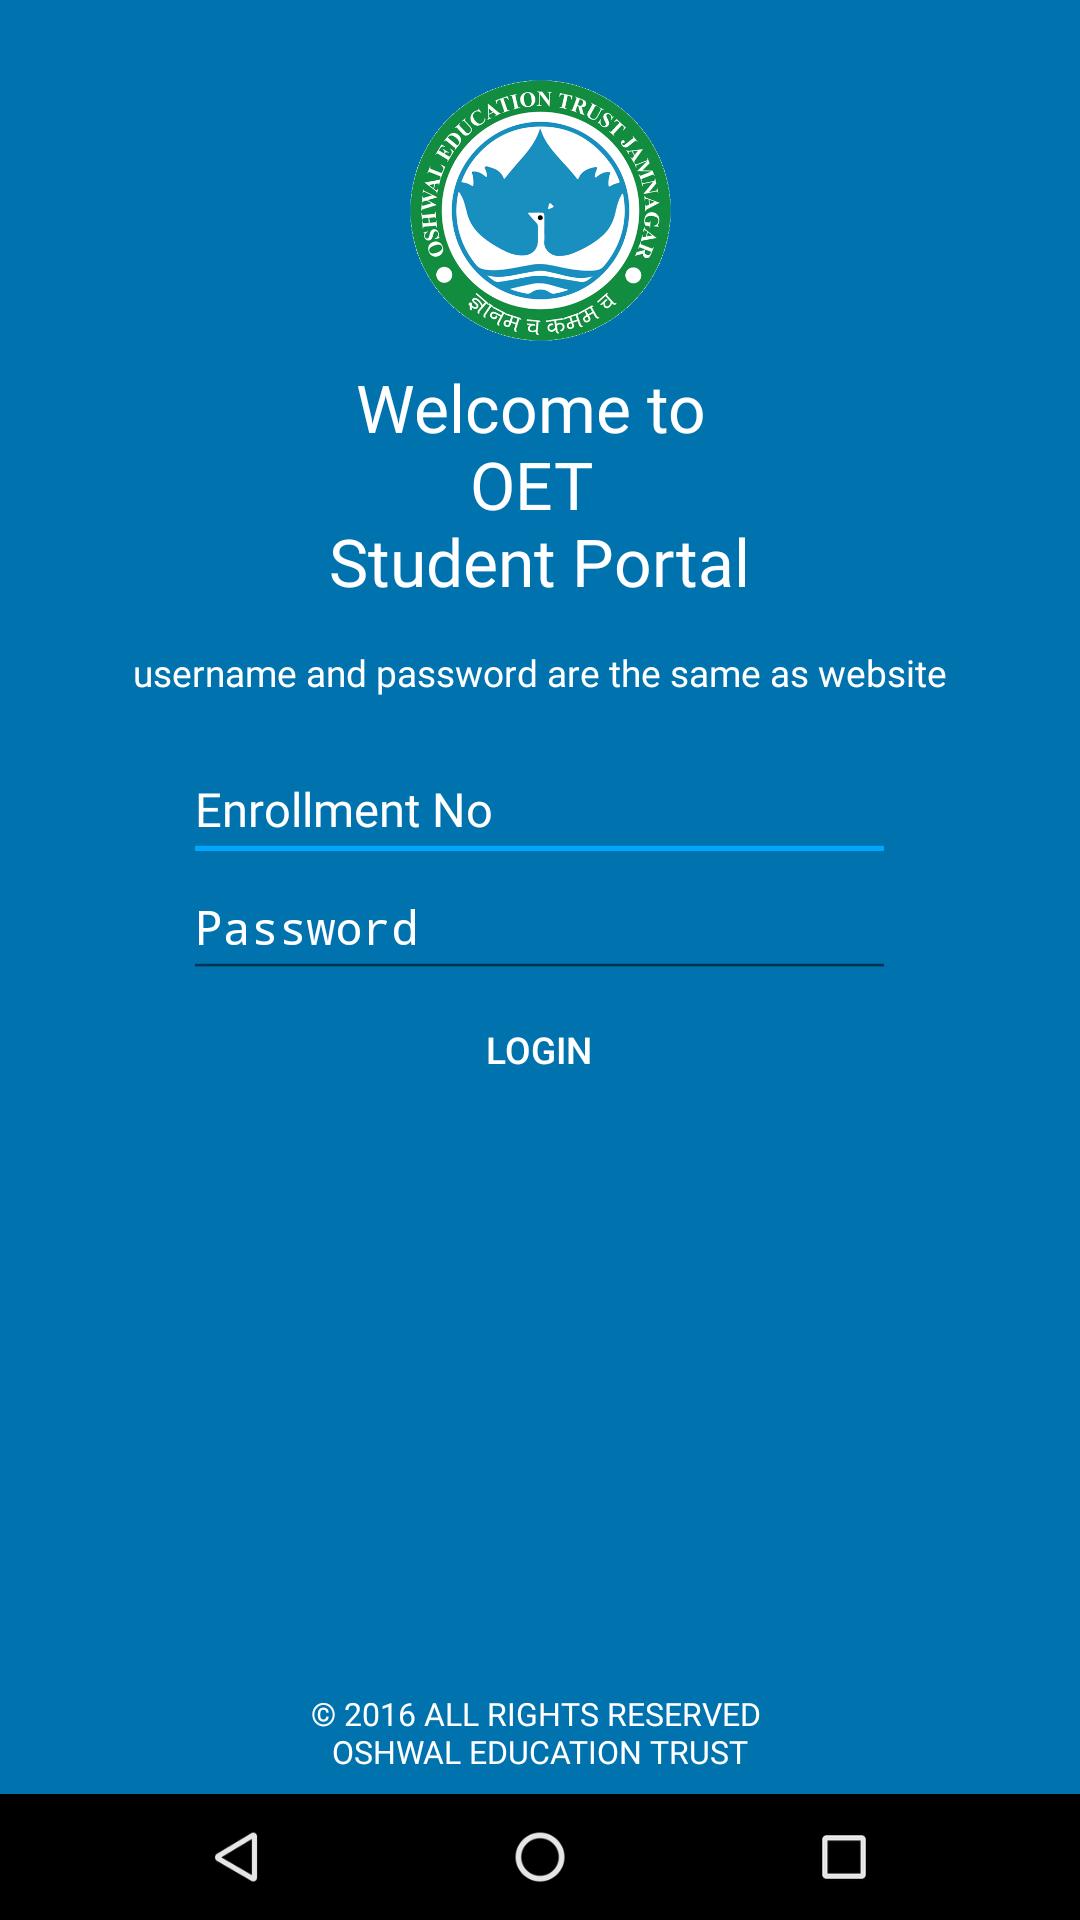 Student portal